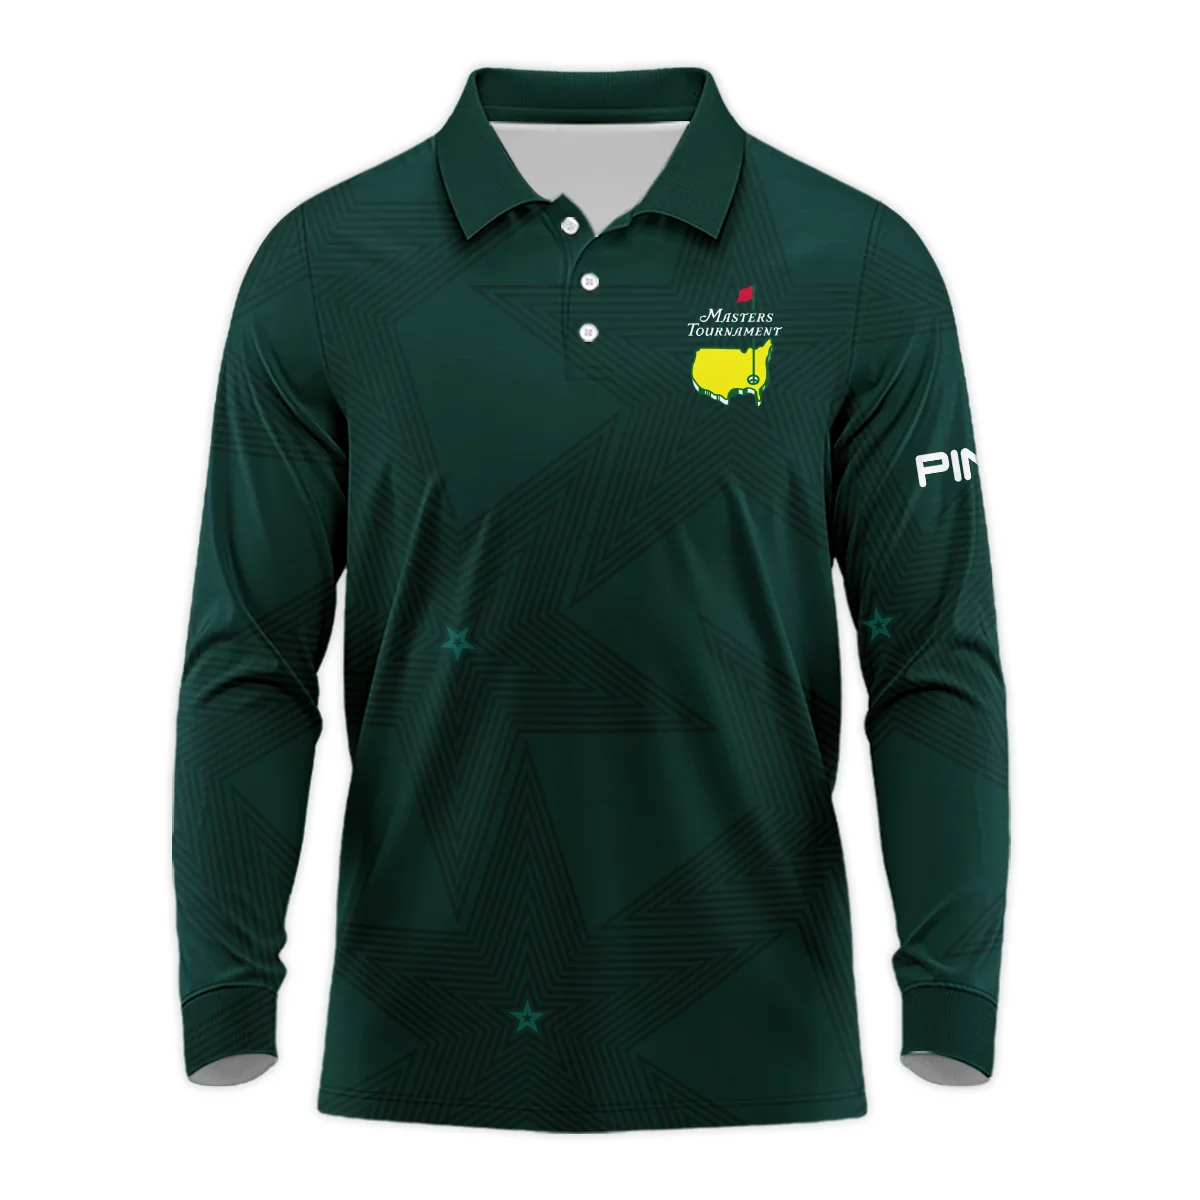 Stars Dark Green Golf Masters Tournament Ping Unisex T-Shirt Style Classic T-Shirt